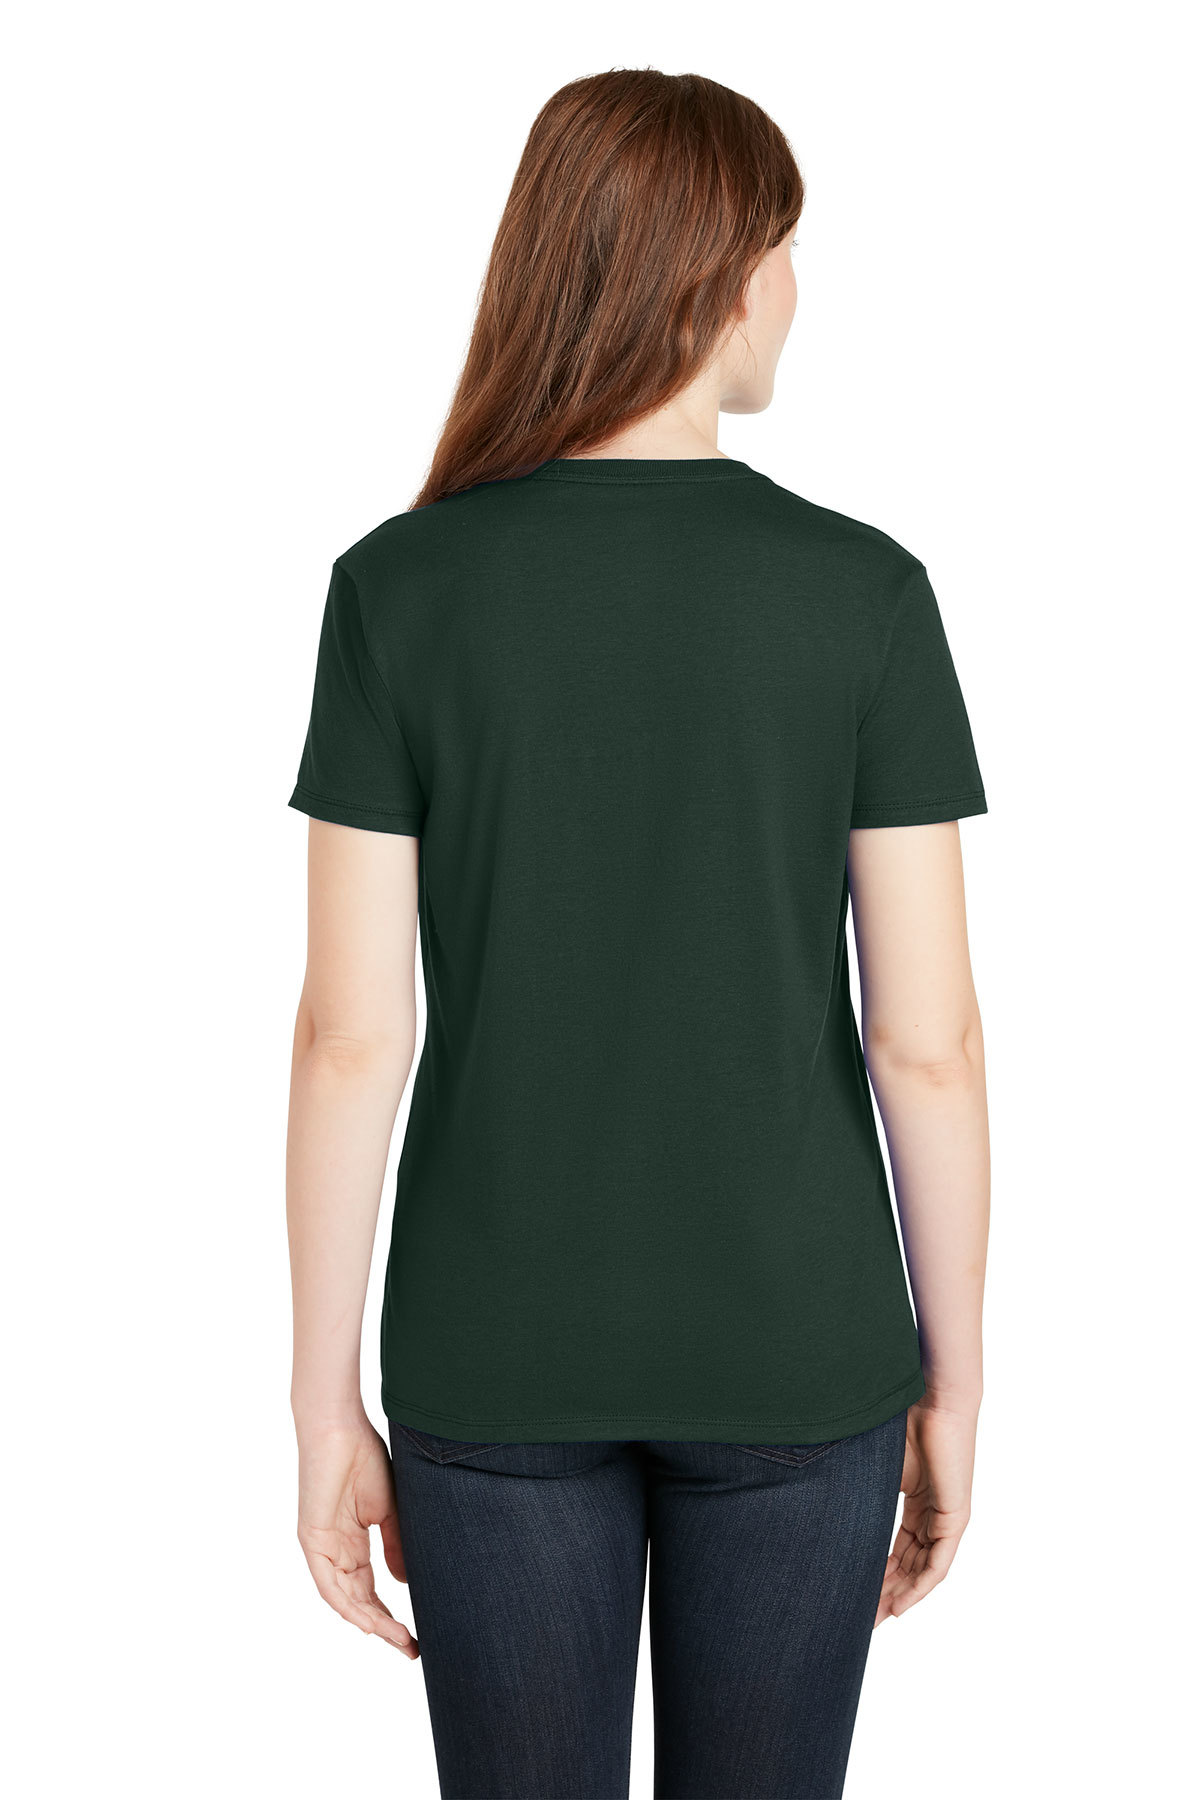 Hanes - Ladies Perfect-T Cotton T-Shirt | Product | SanMar